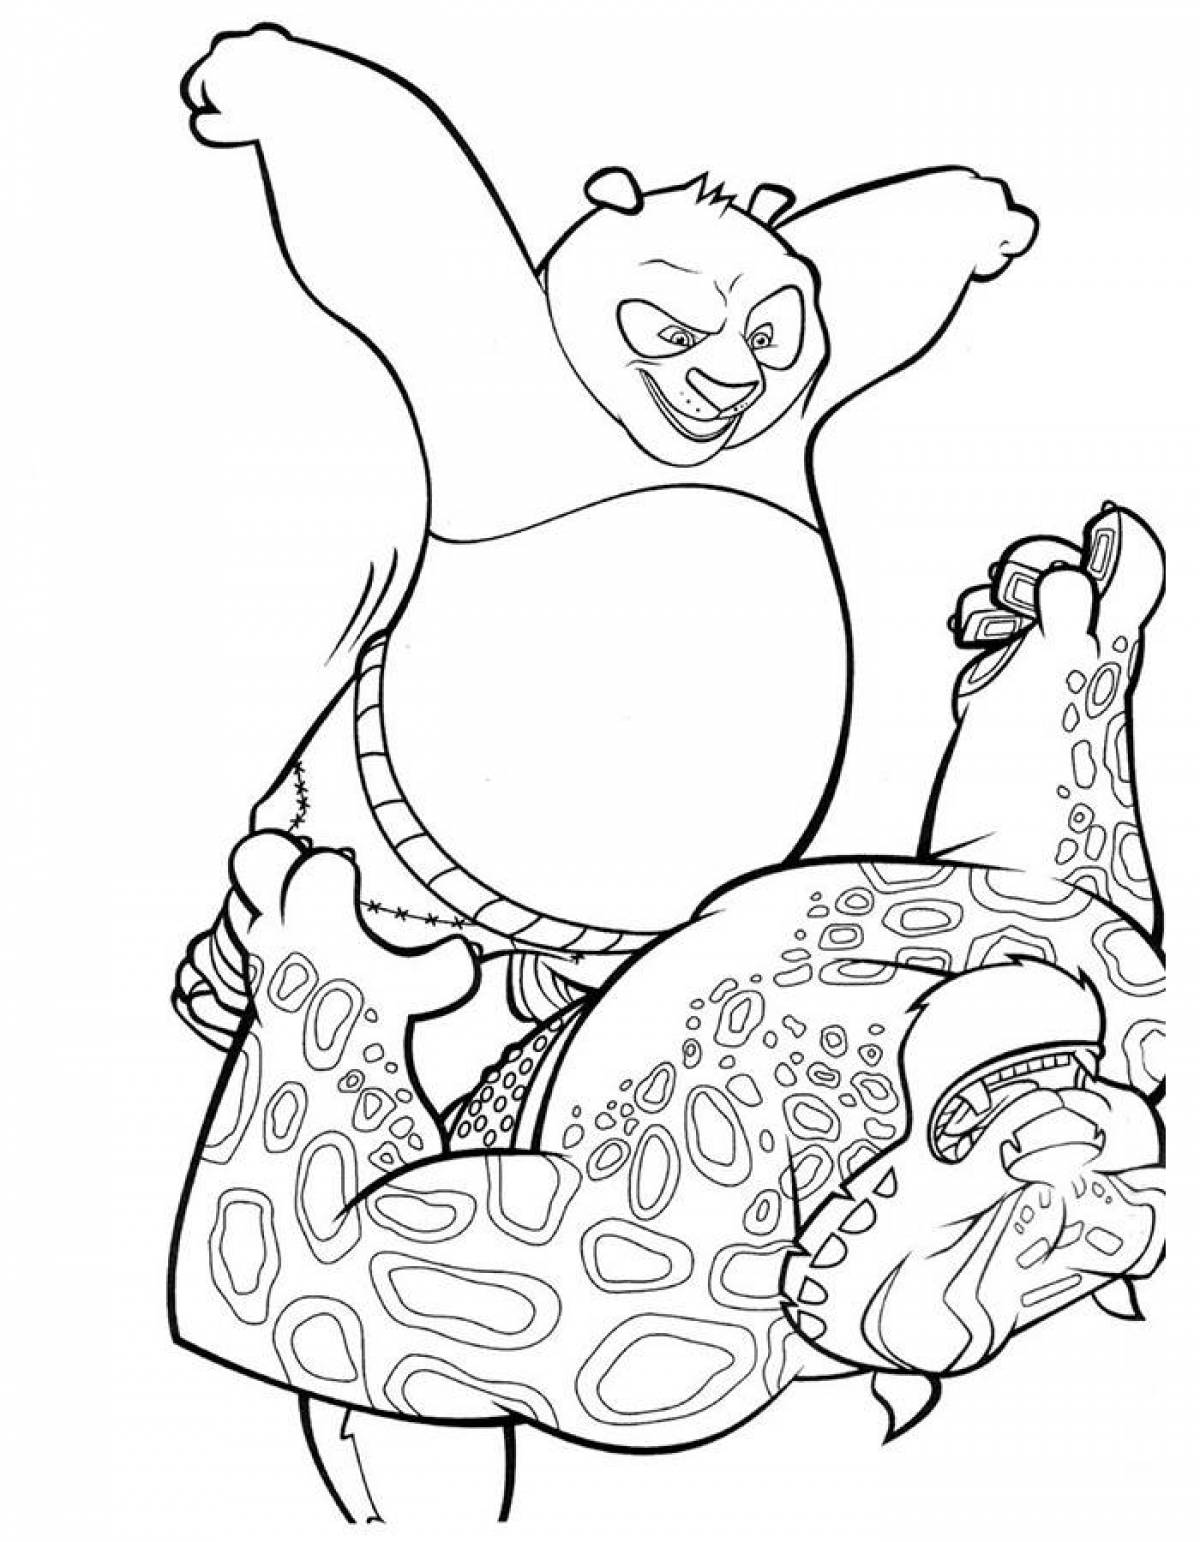 Раскраска кунг фу панда. Раскраска кунг фу Панда 3. Кунг фу Панда раскраска для детей. Раскраска кунфу Панда 3.